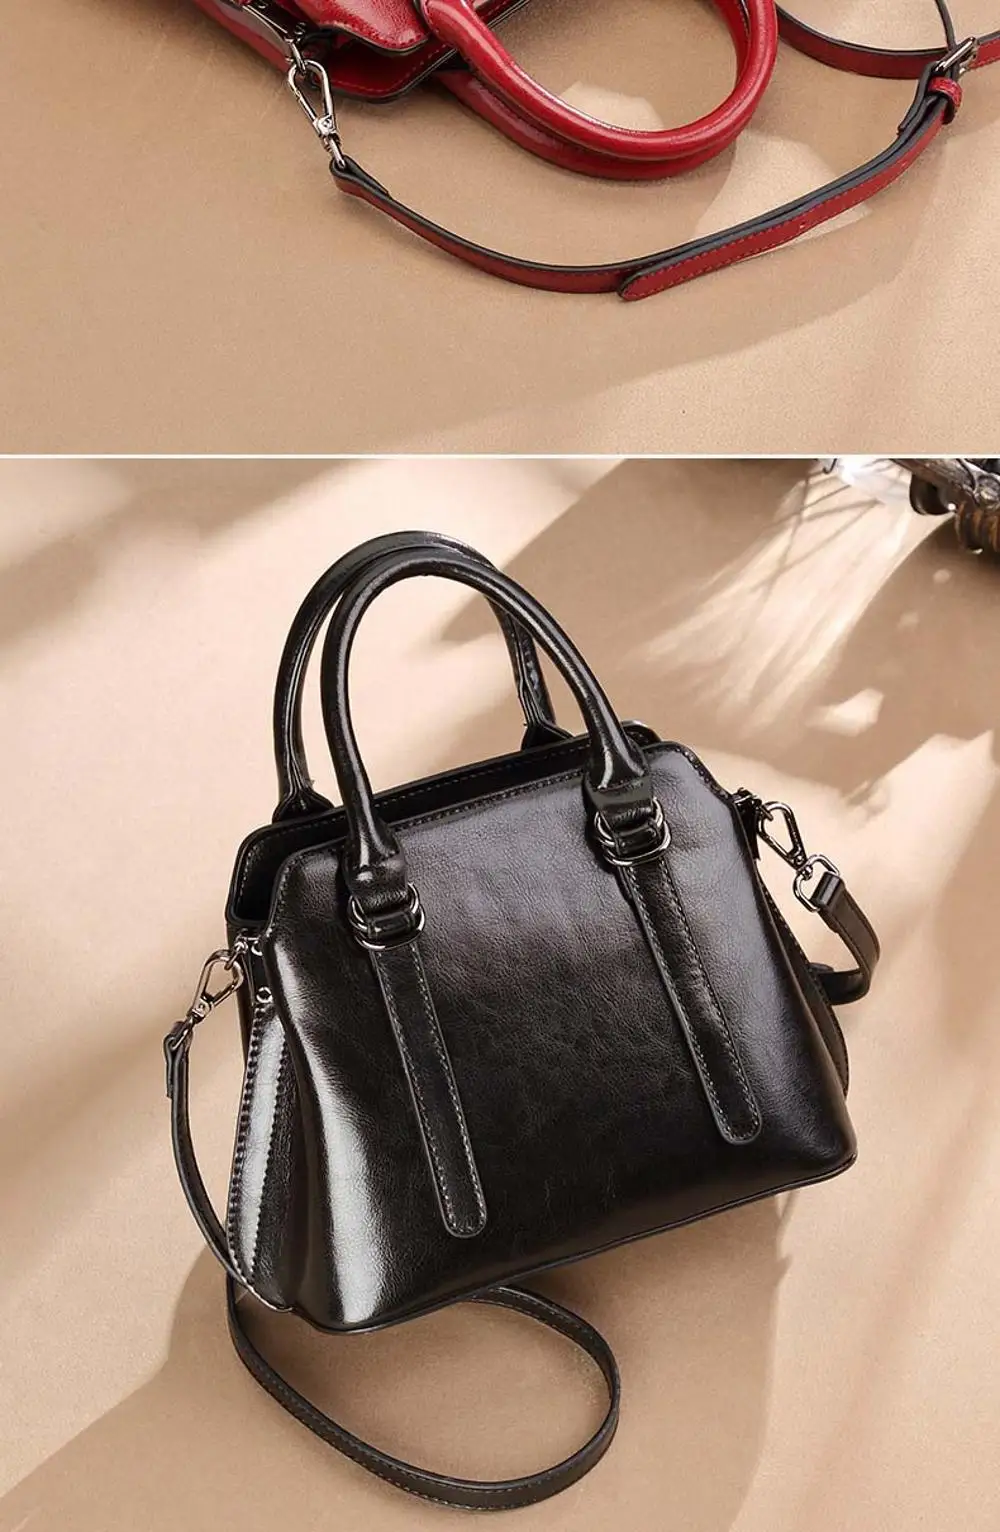 Nalandu Top-rated July Women Handbags Genuine Leather Lady Bag - Buy Hand Bags,Genuine Leather ...